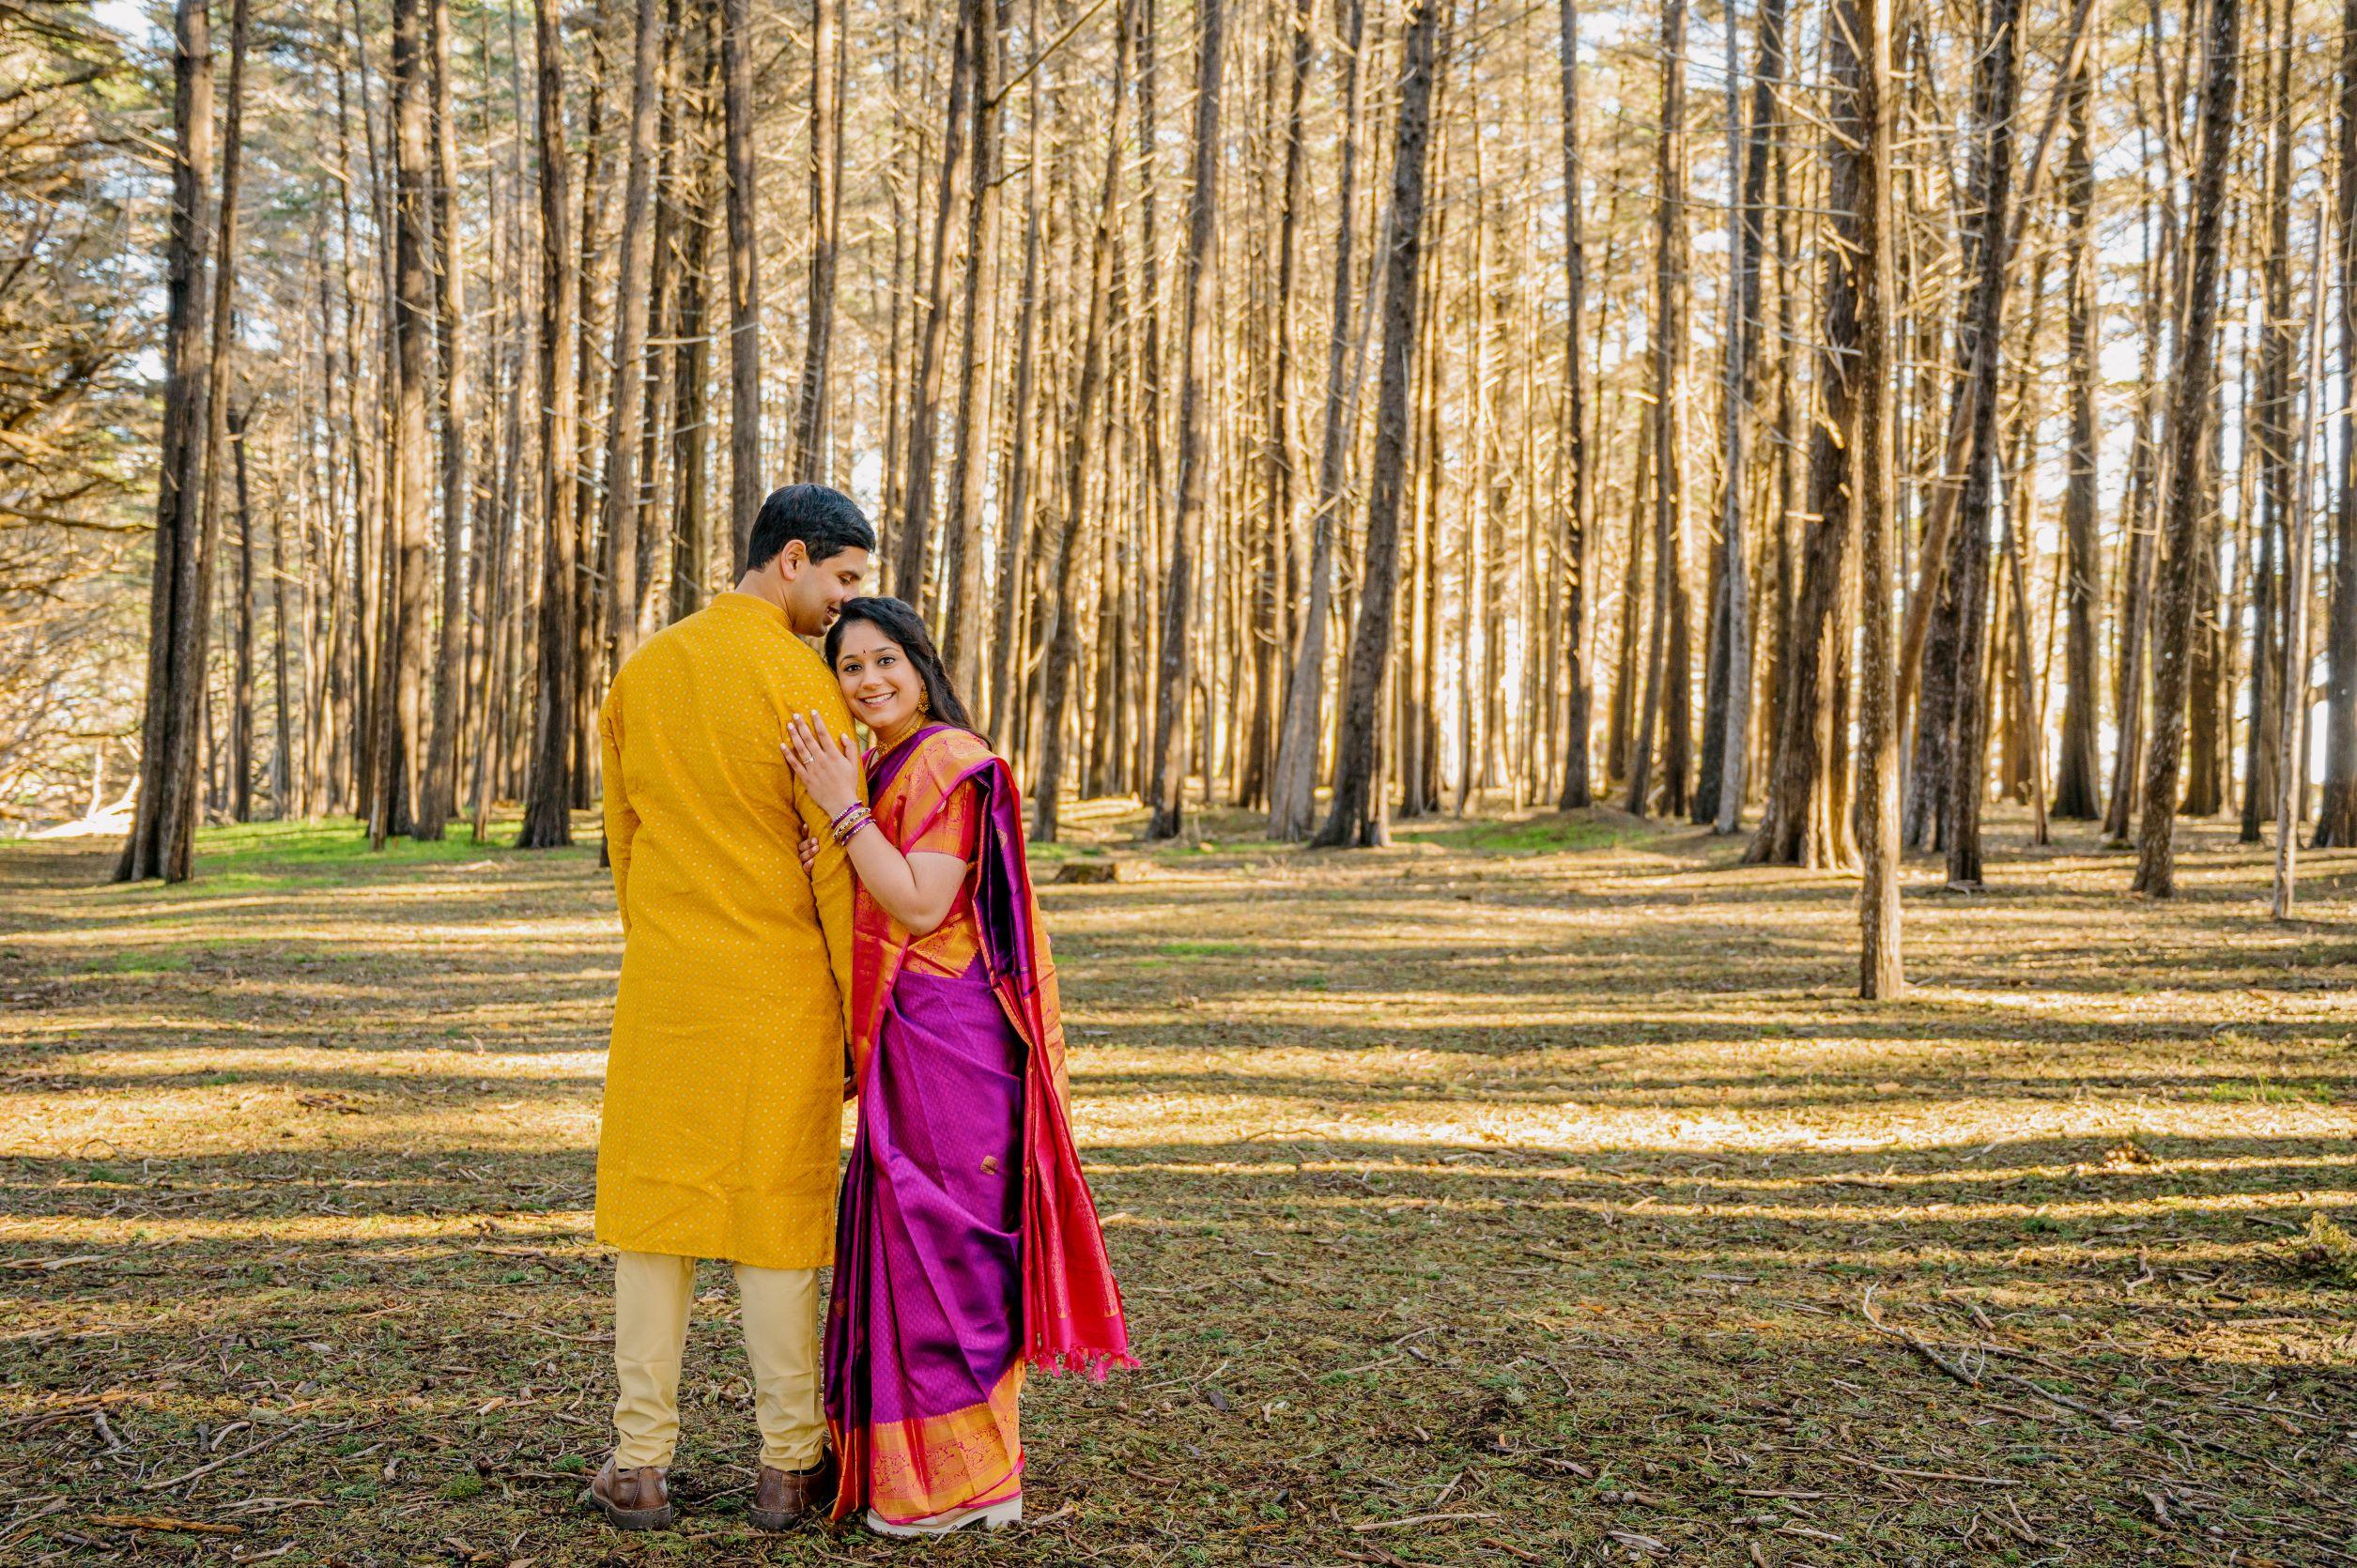 The Wedding Website of Nandhitha Kumar and Ashwin Srikant